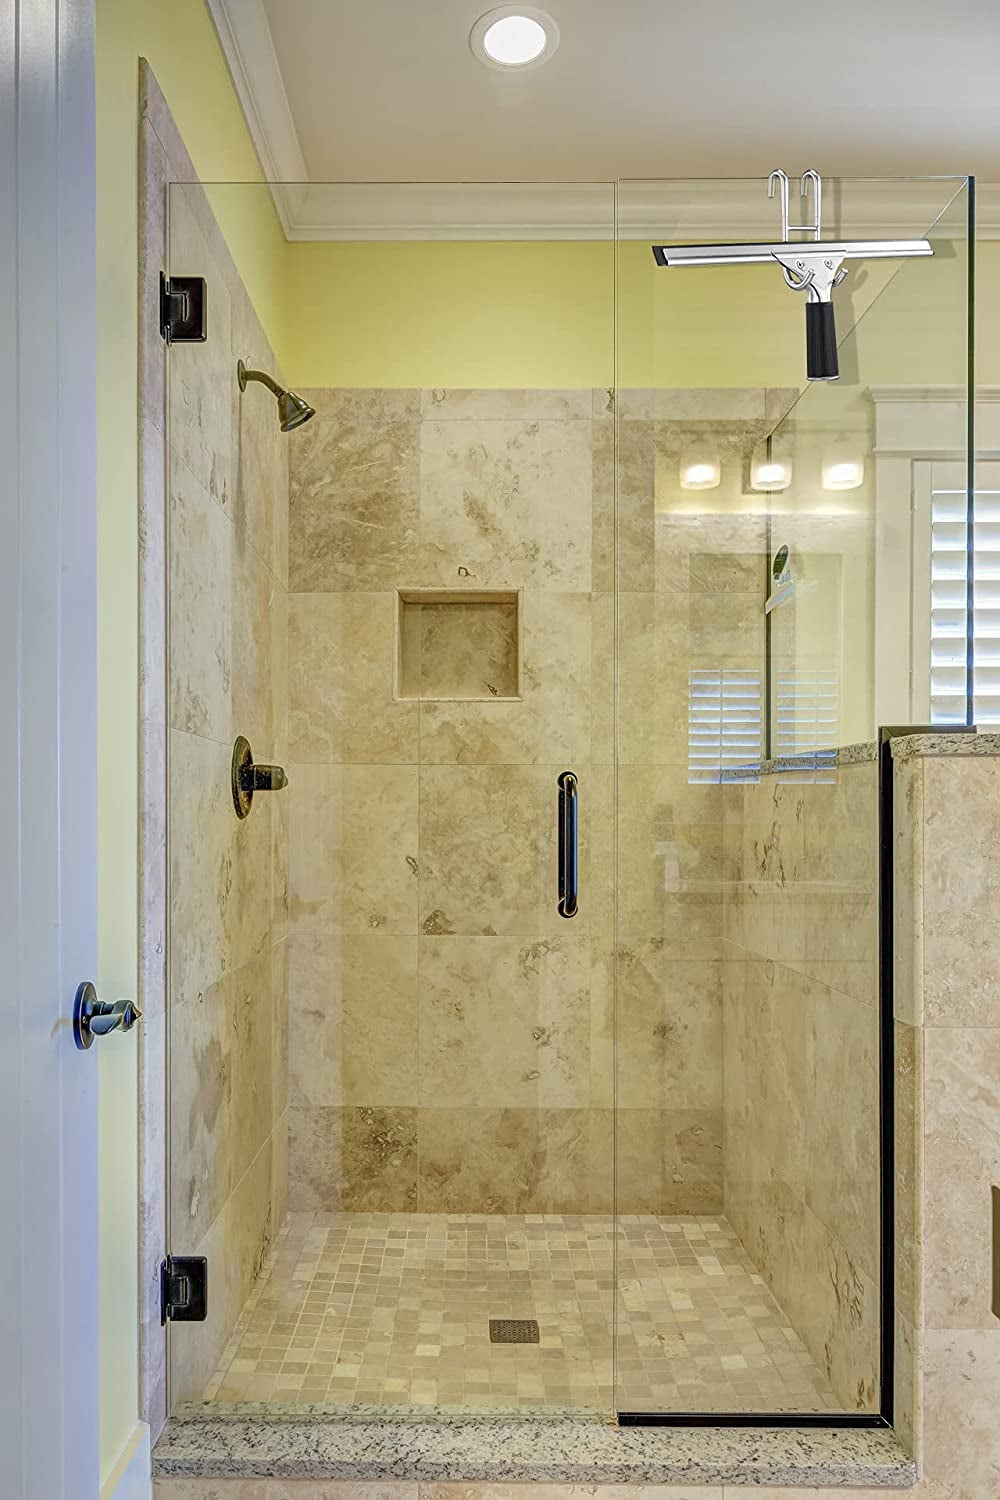 Pack Expandable Shower Door Hooks, Heavy Duty Stainless Steel Towel Hook No  Drilling Over Door Hook For Bathroom Frameless Glass Shower Door Hs